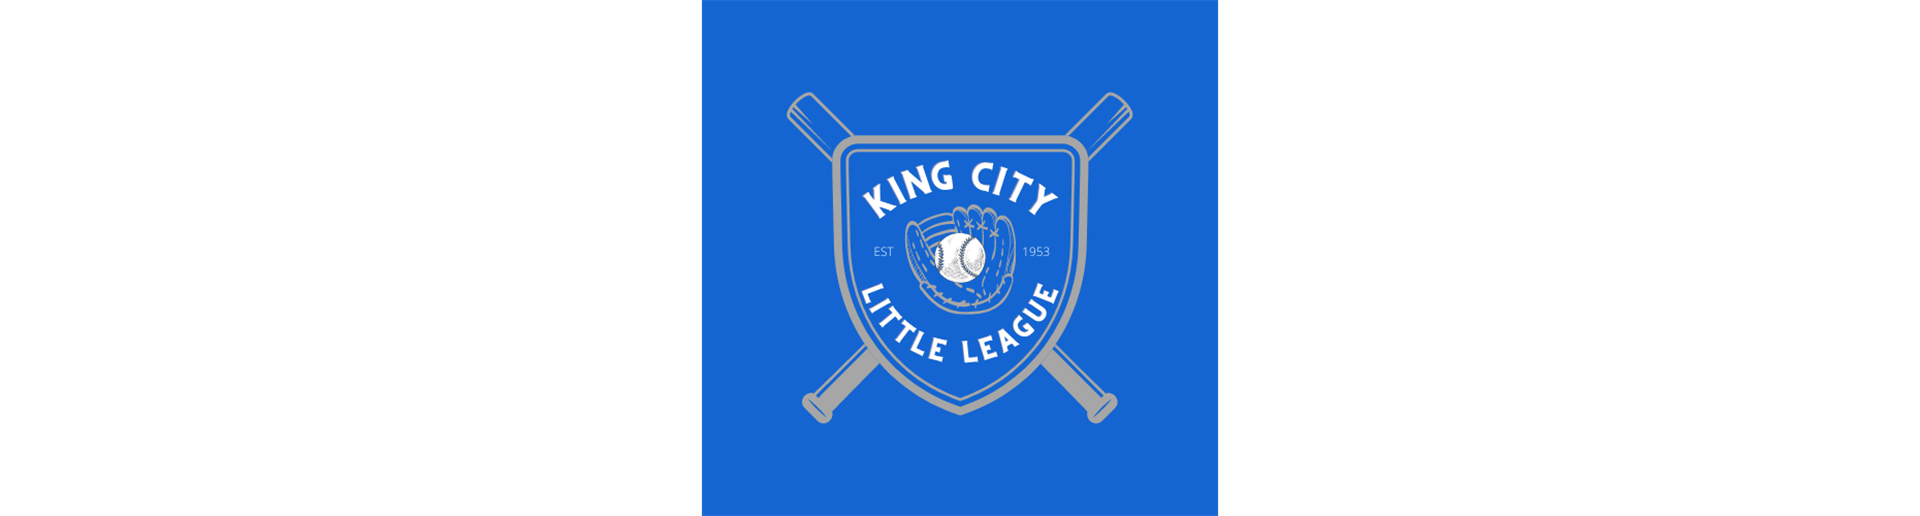 King City Little League Logo